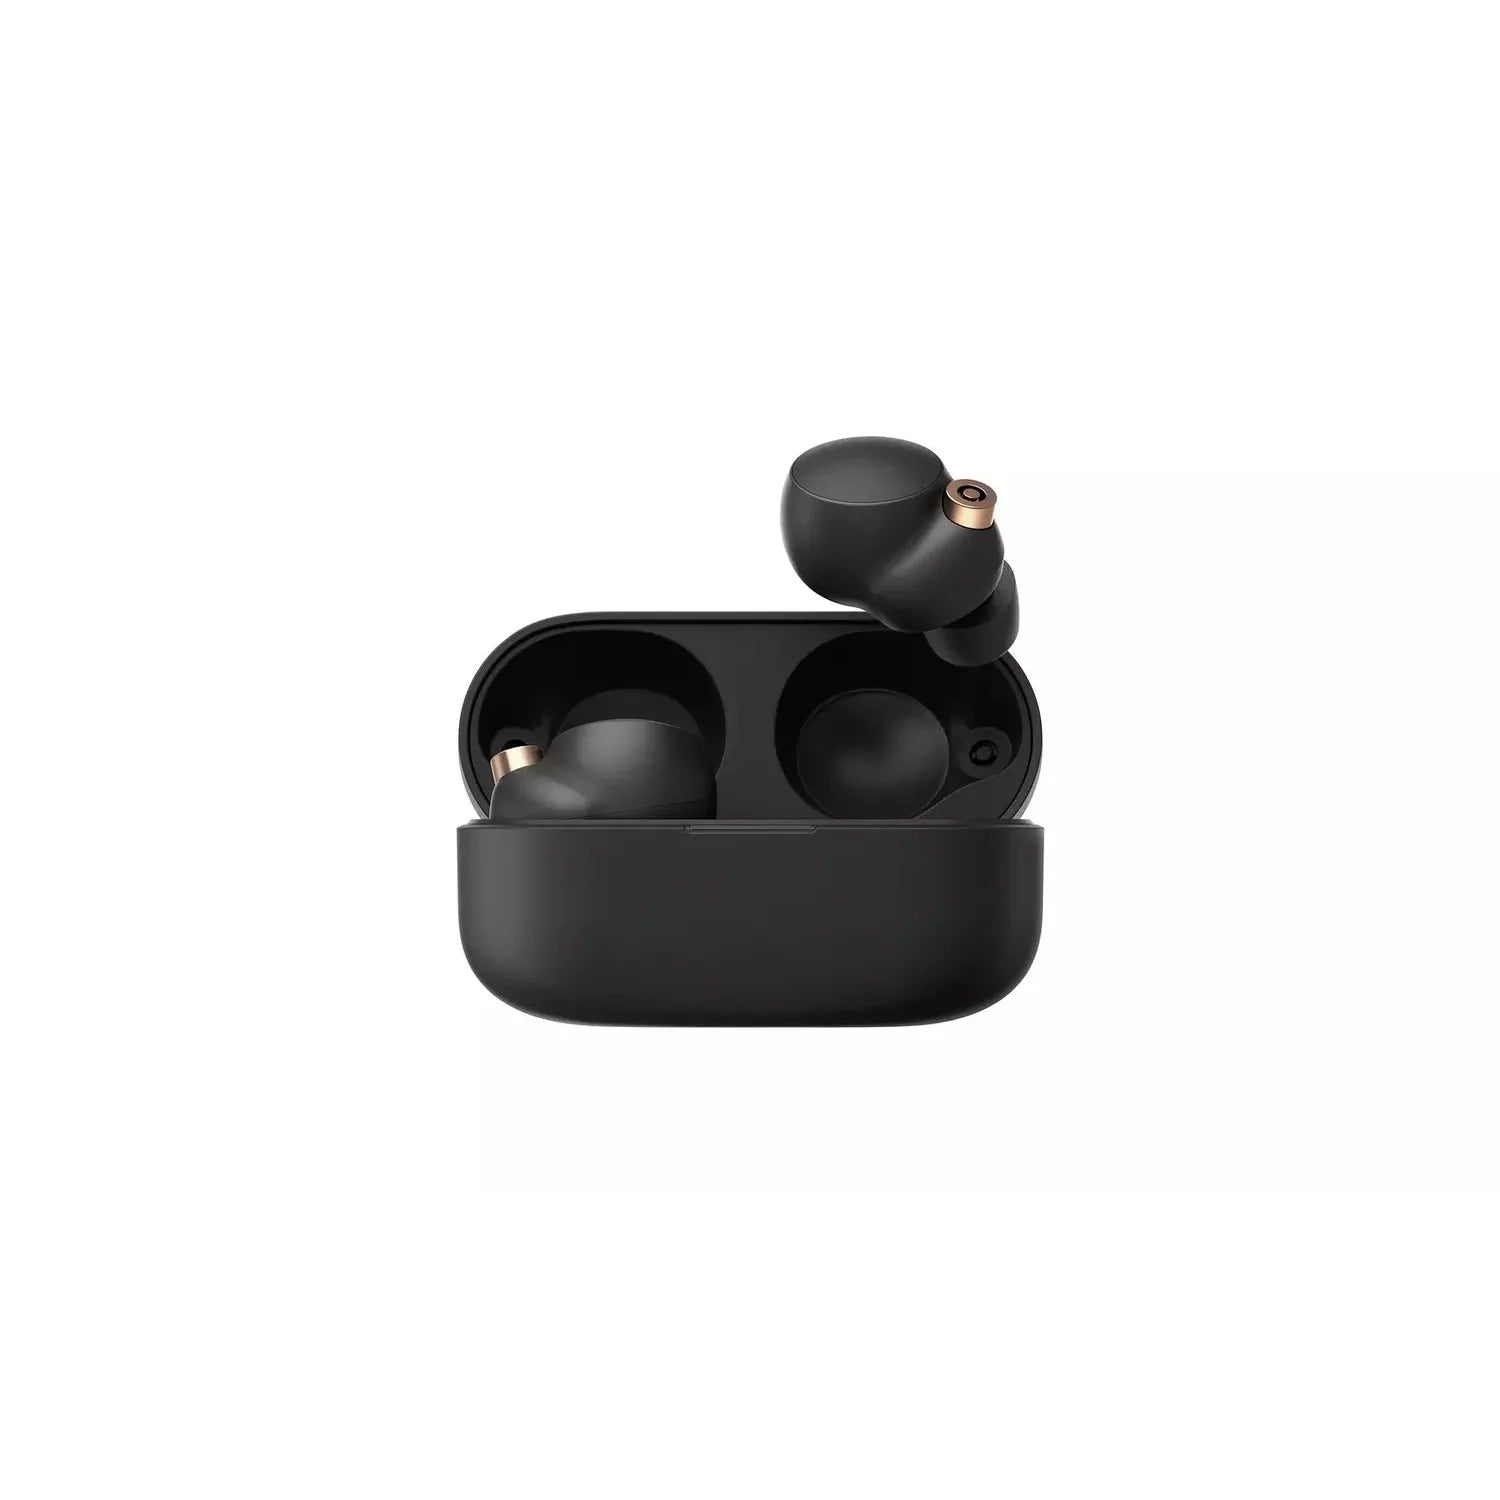 Sony WF-1000XM4 True Wireless Headphones - Black - Refurbished Good